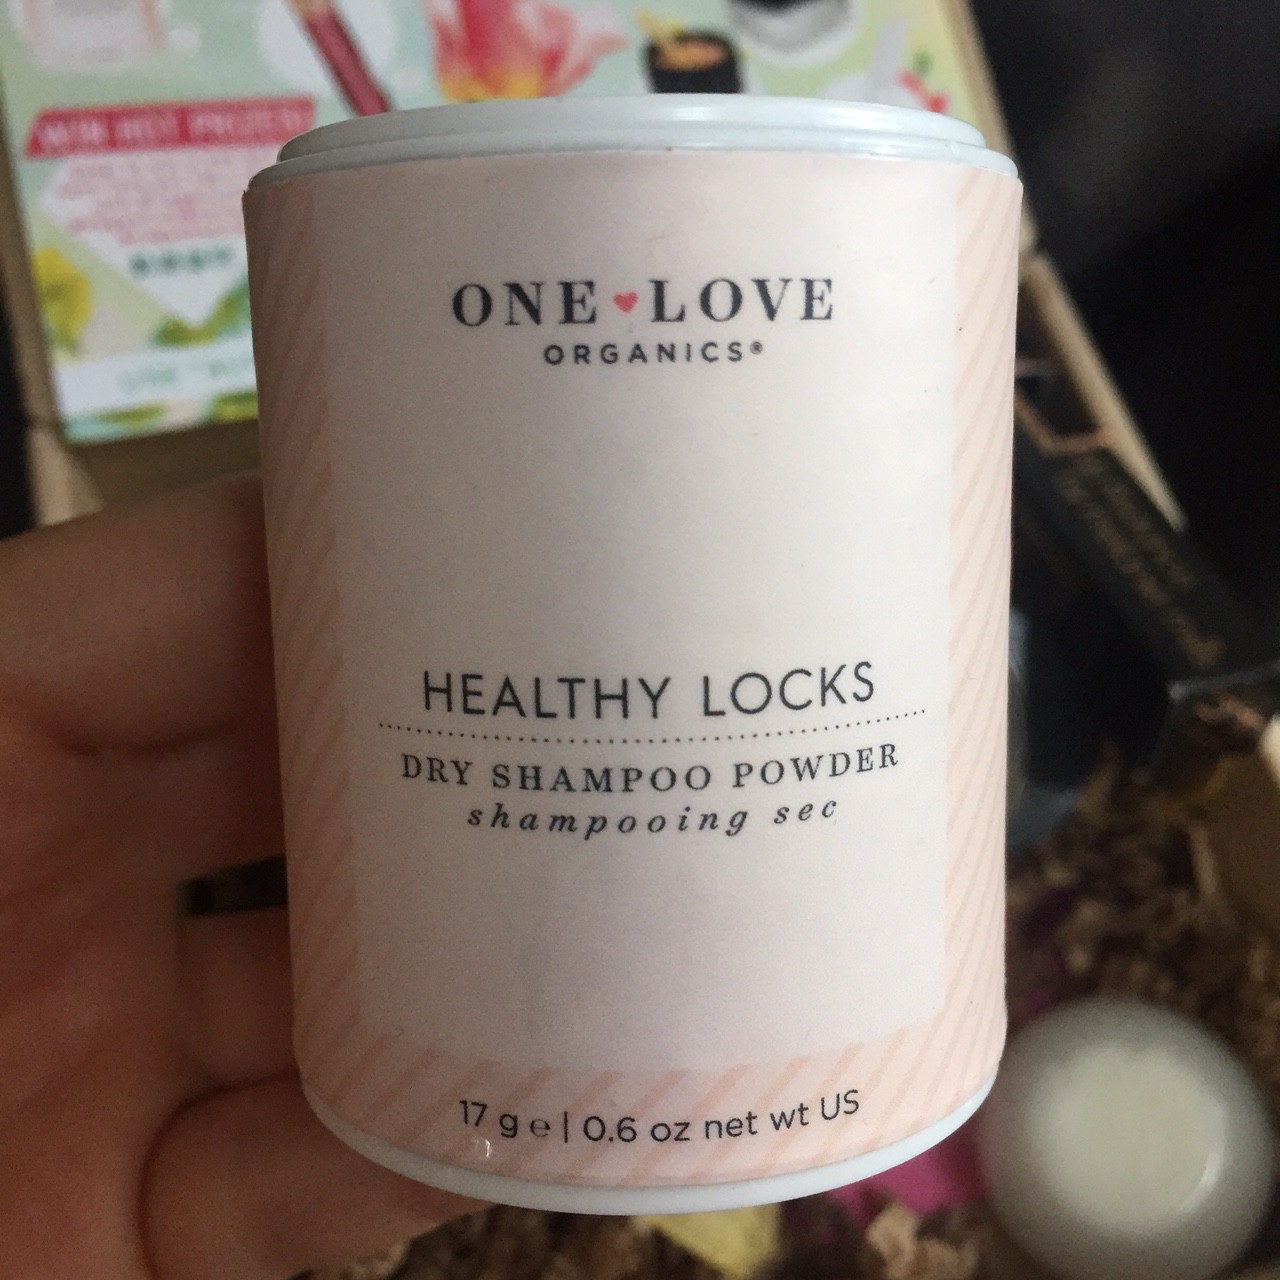 One Love Organics Healthy Locks Dry Shampoo Powder